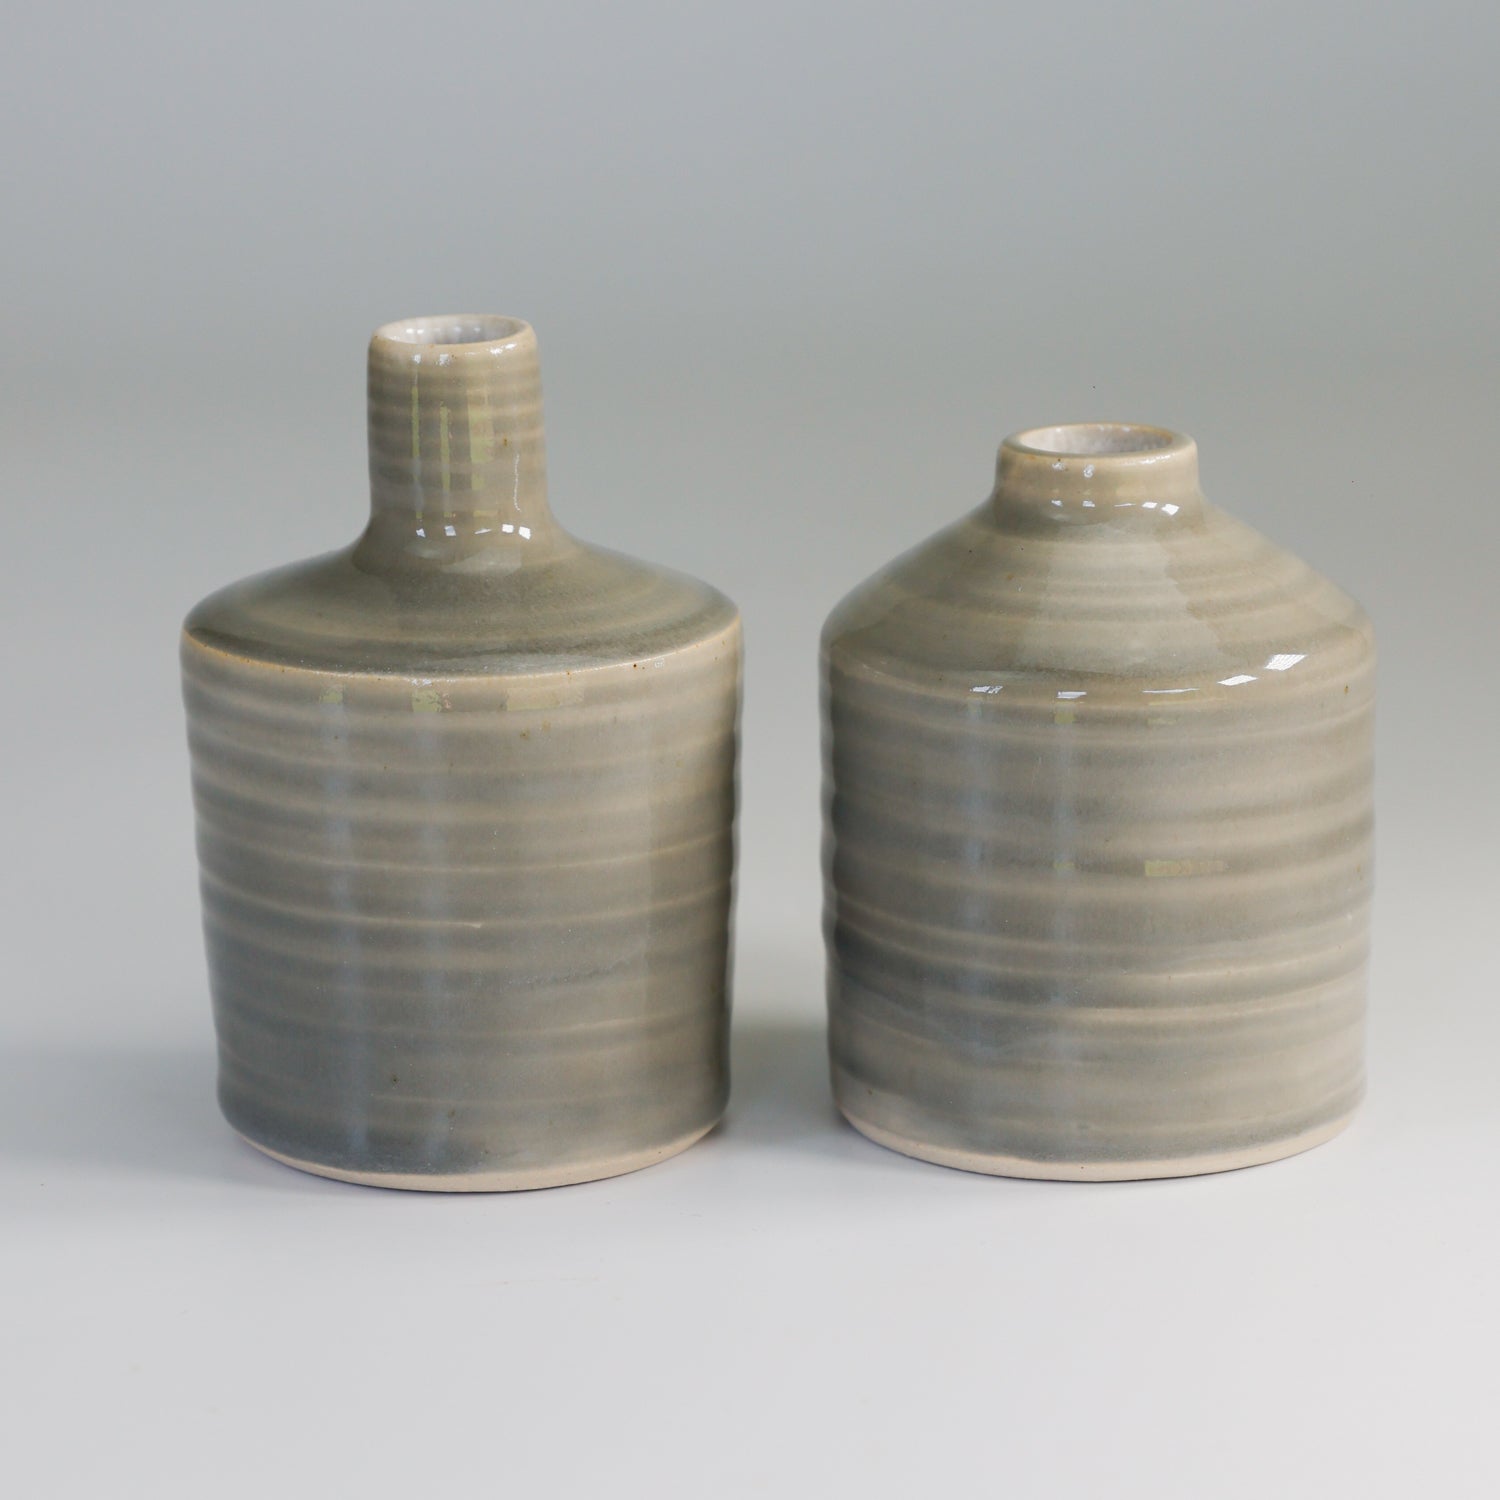 Pair of grey pottery bud vases. Handmade.